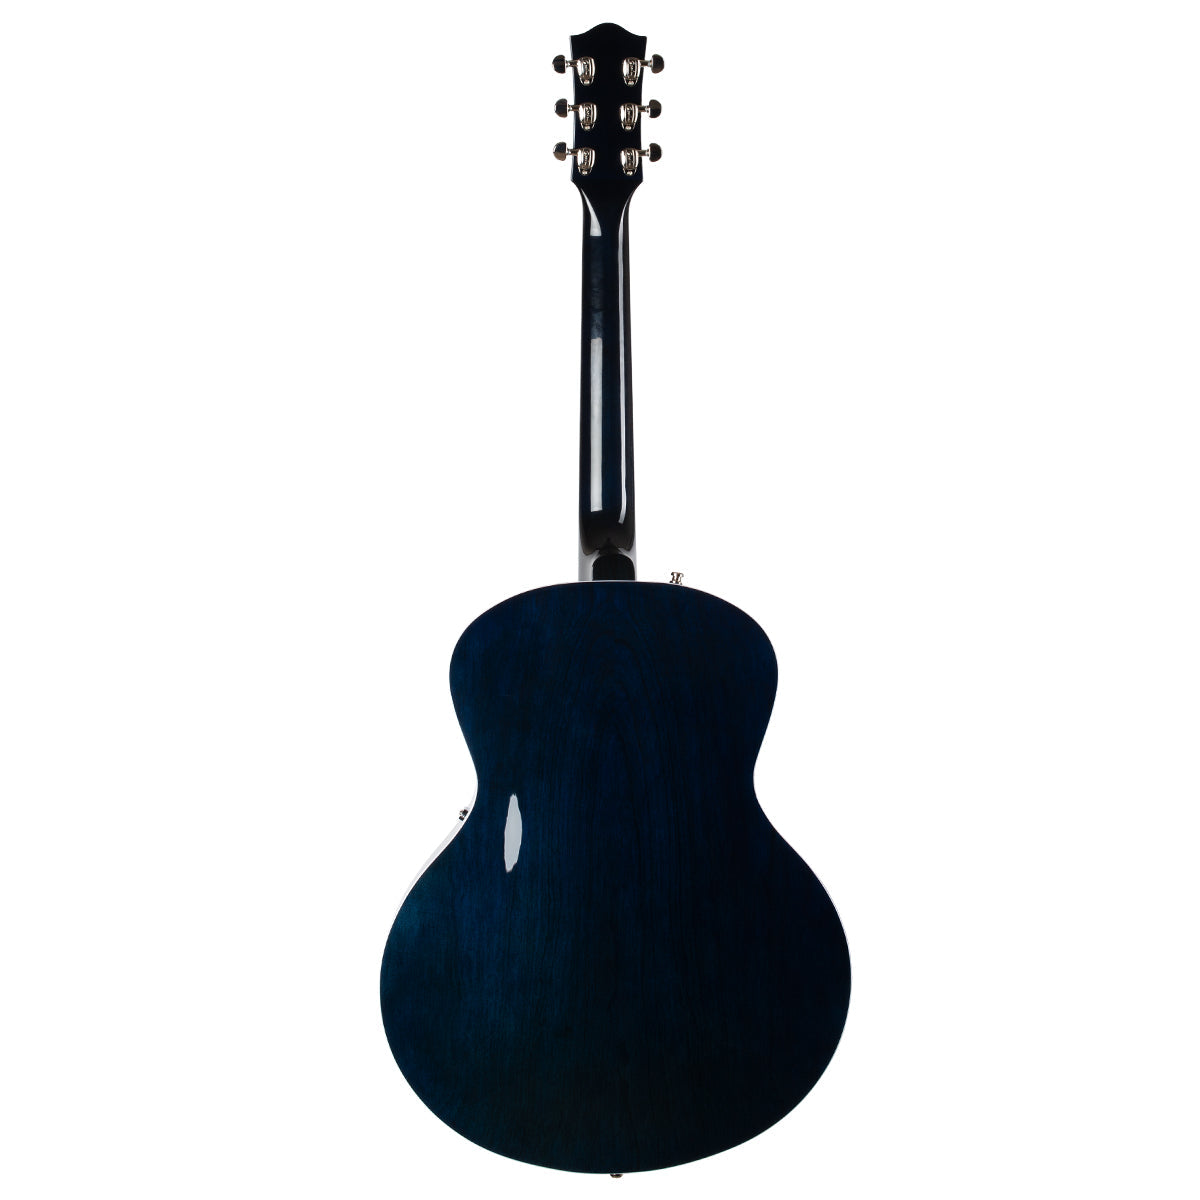 Godin 5th Avenue Semi-Acoustic Guitar ~ Nightclub Indigo Blue, Semi-Acoustic Guitars for sale at Richards Guitars.